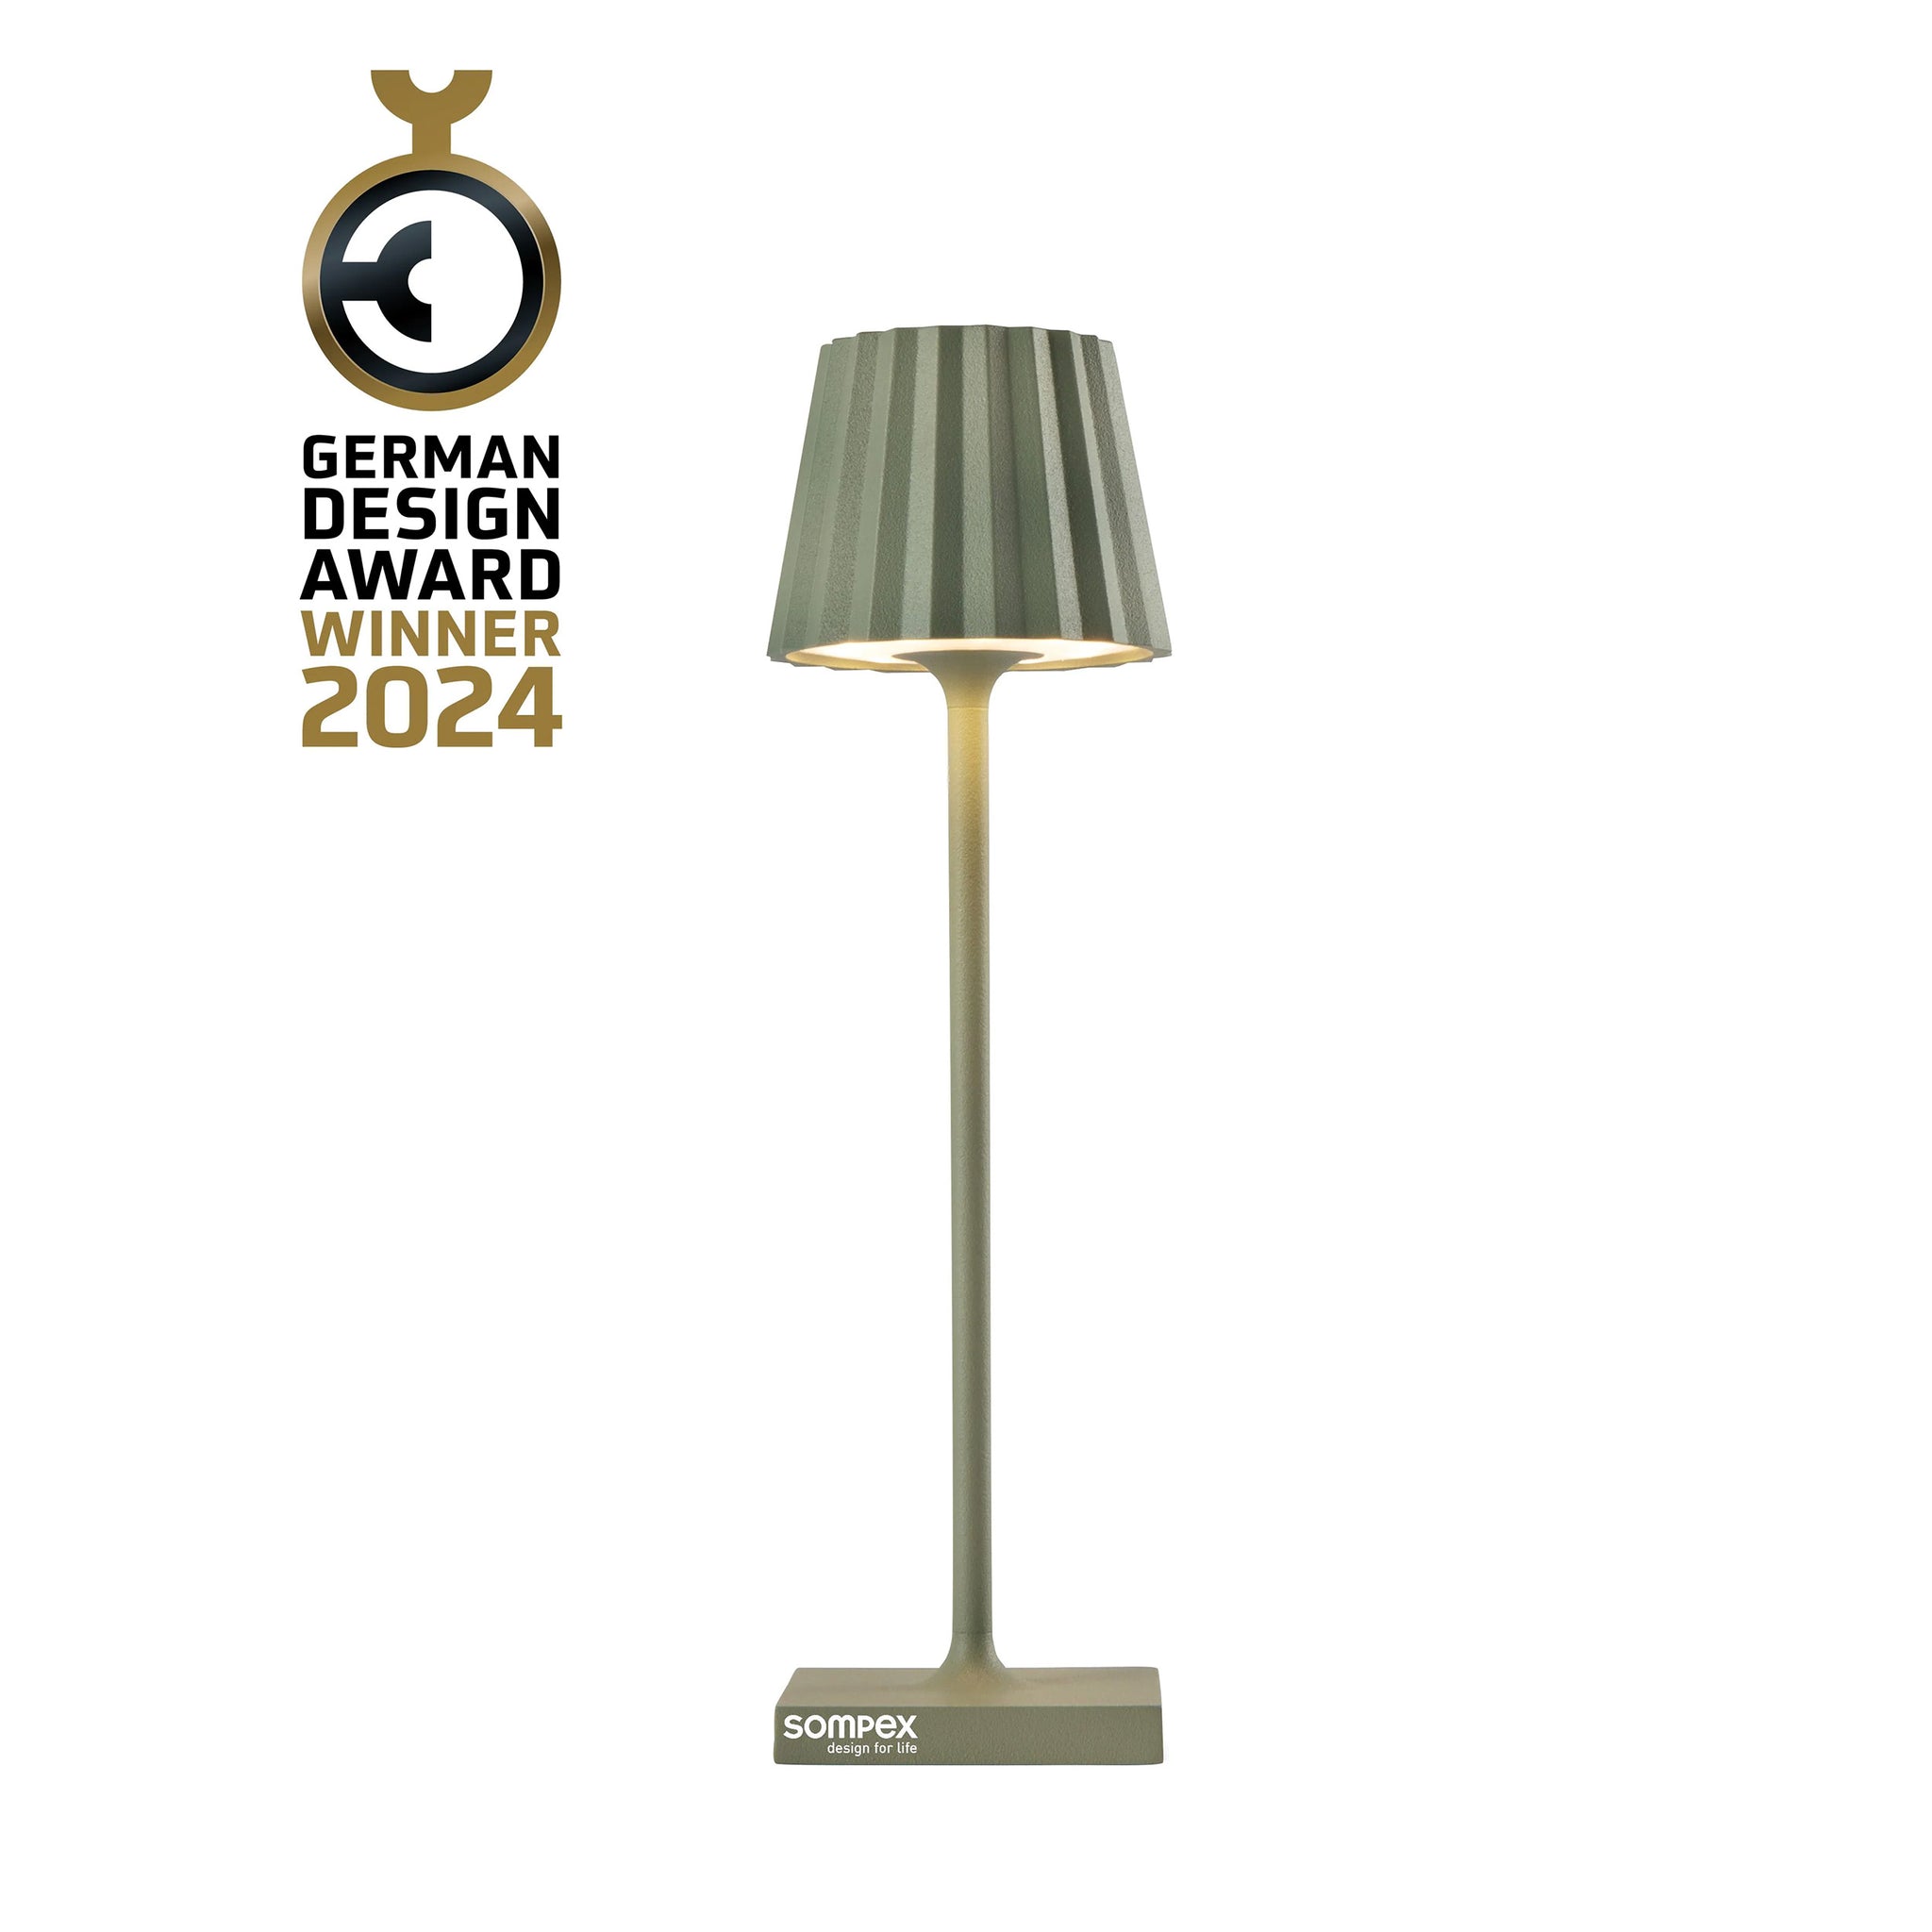 Sompex Troll Nano Olijfgroen│Oplaadbare Tafellamp│Buitenverlichting│art. 78574│logo German Design Award Winner 2024